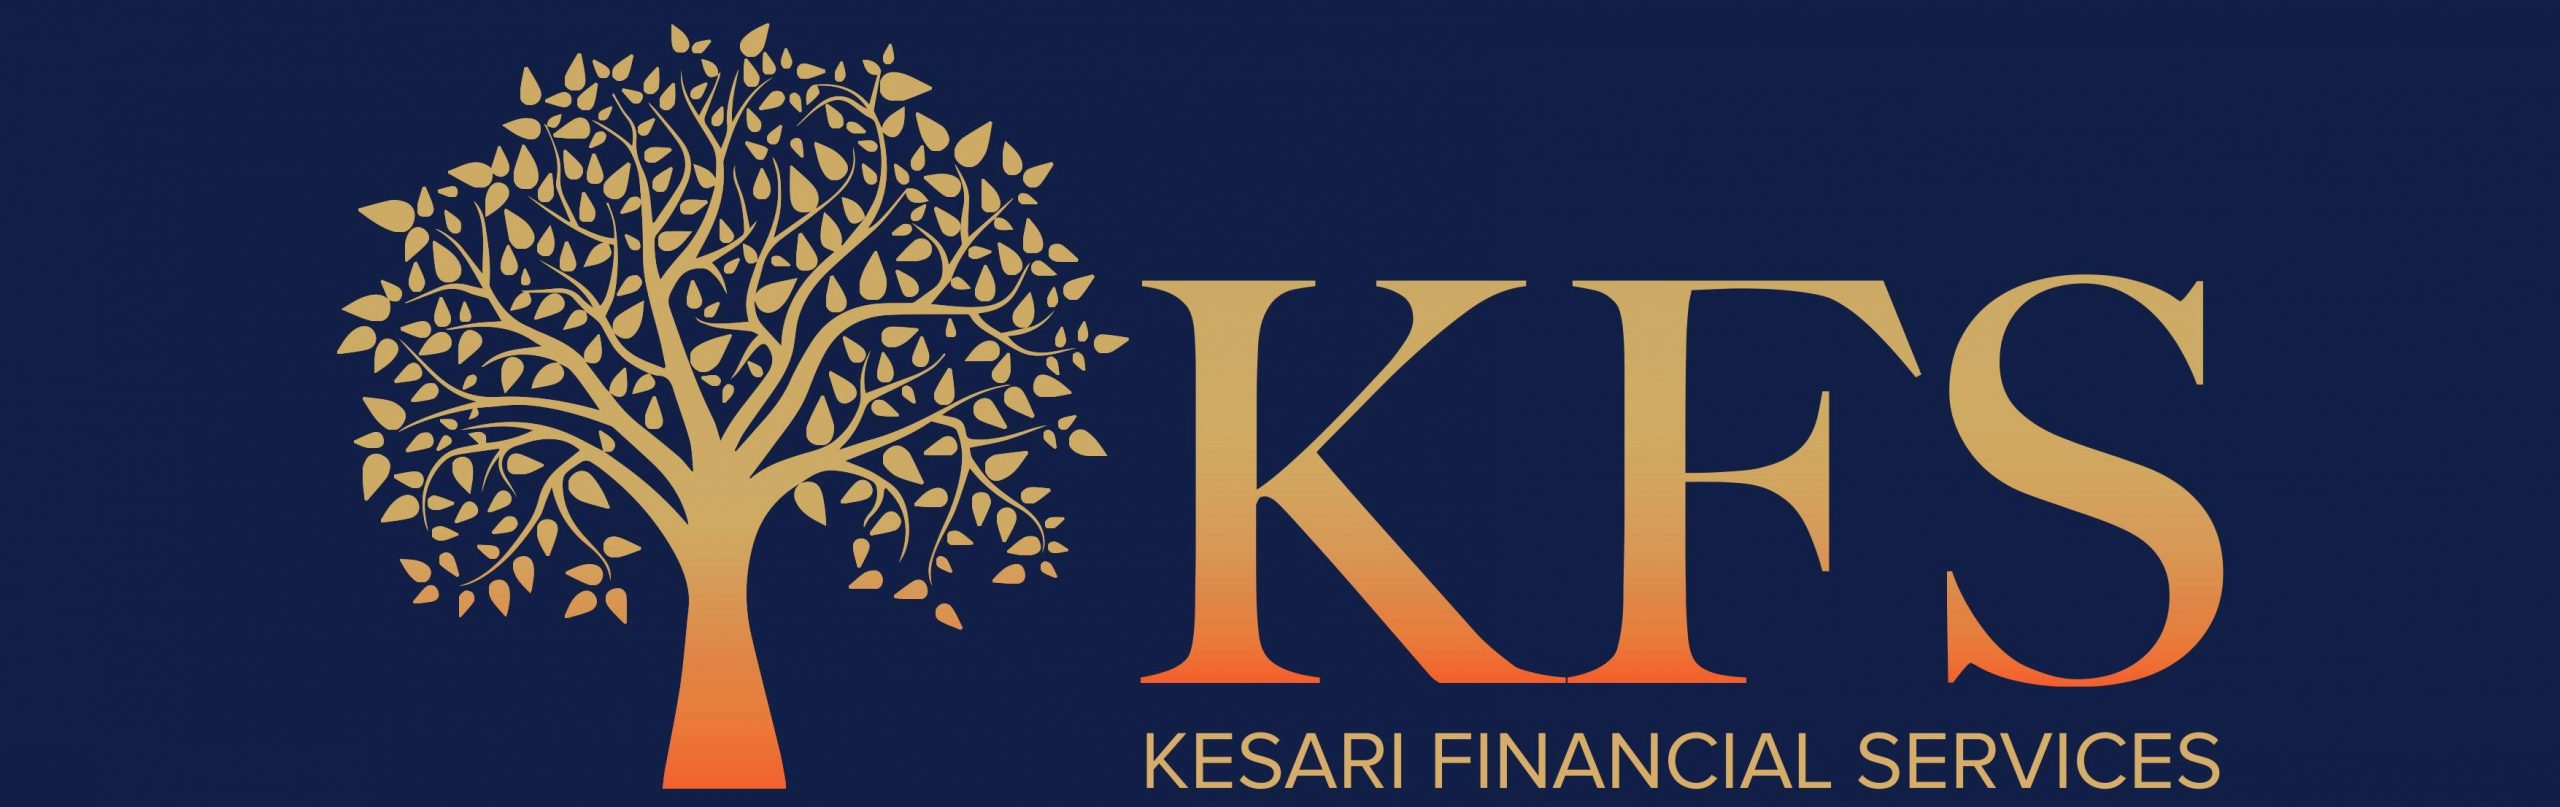 kesari financial services